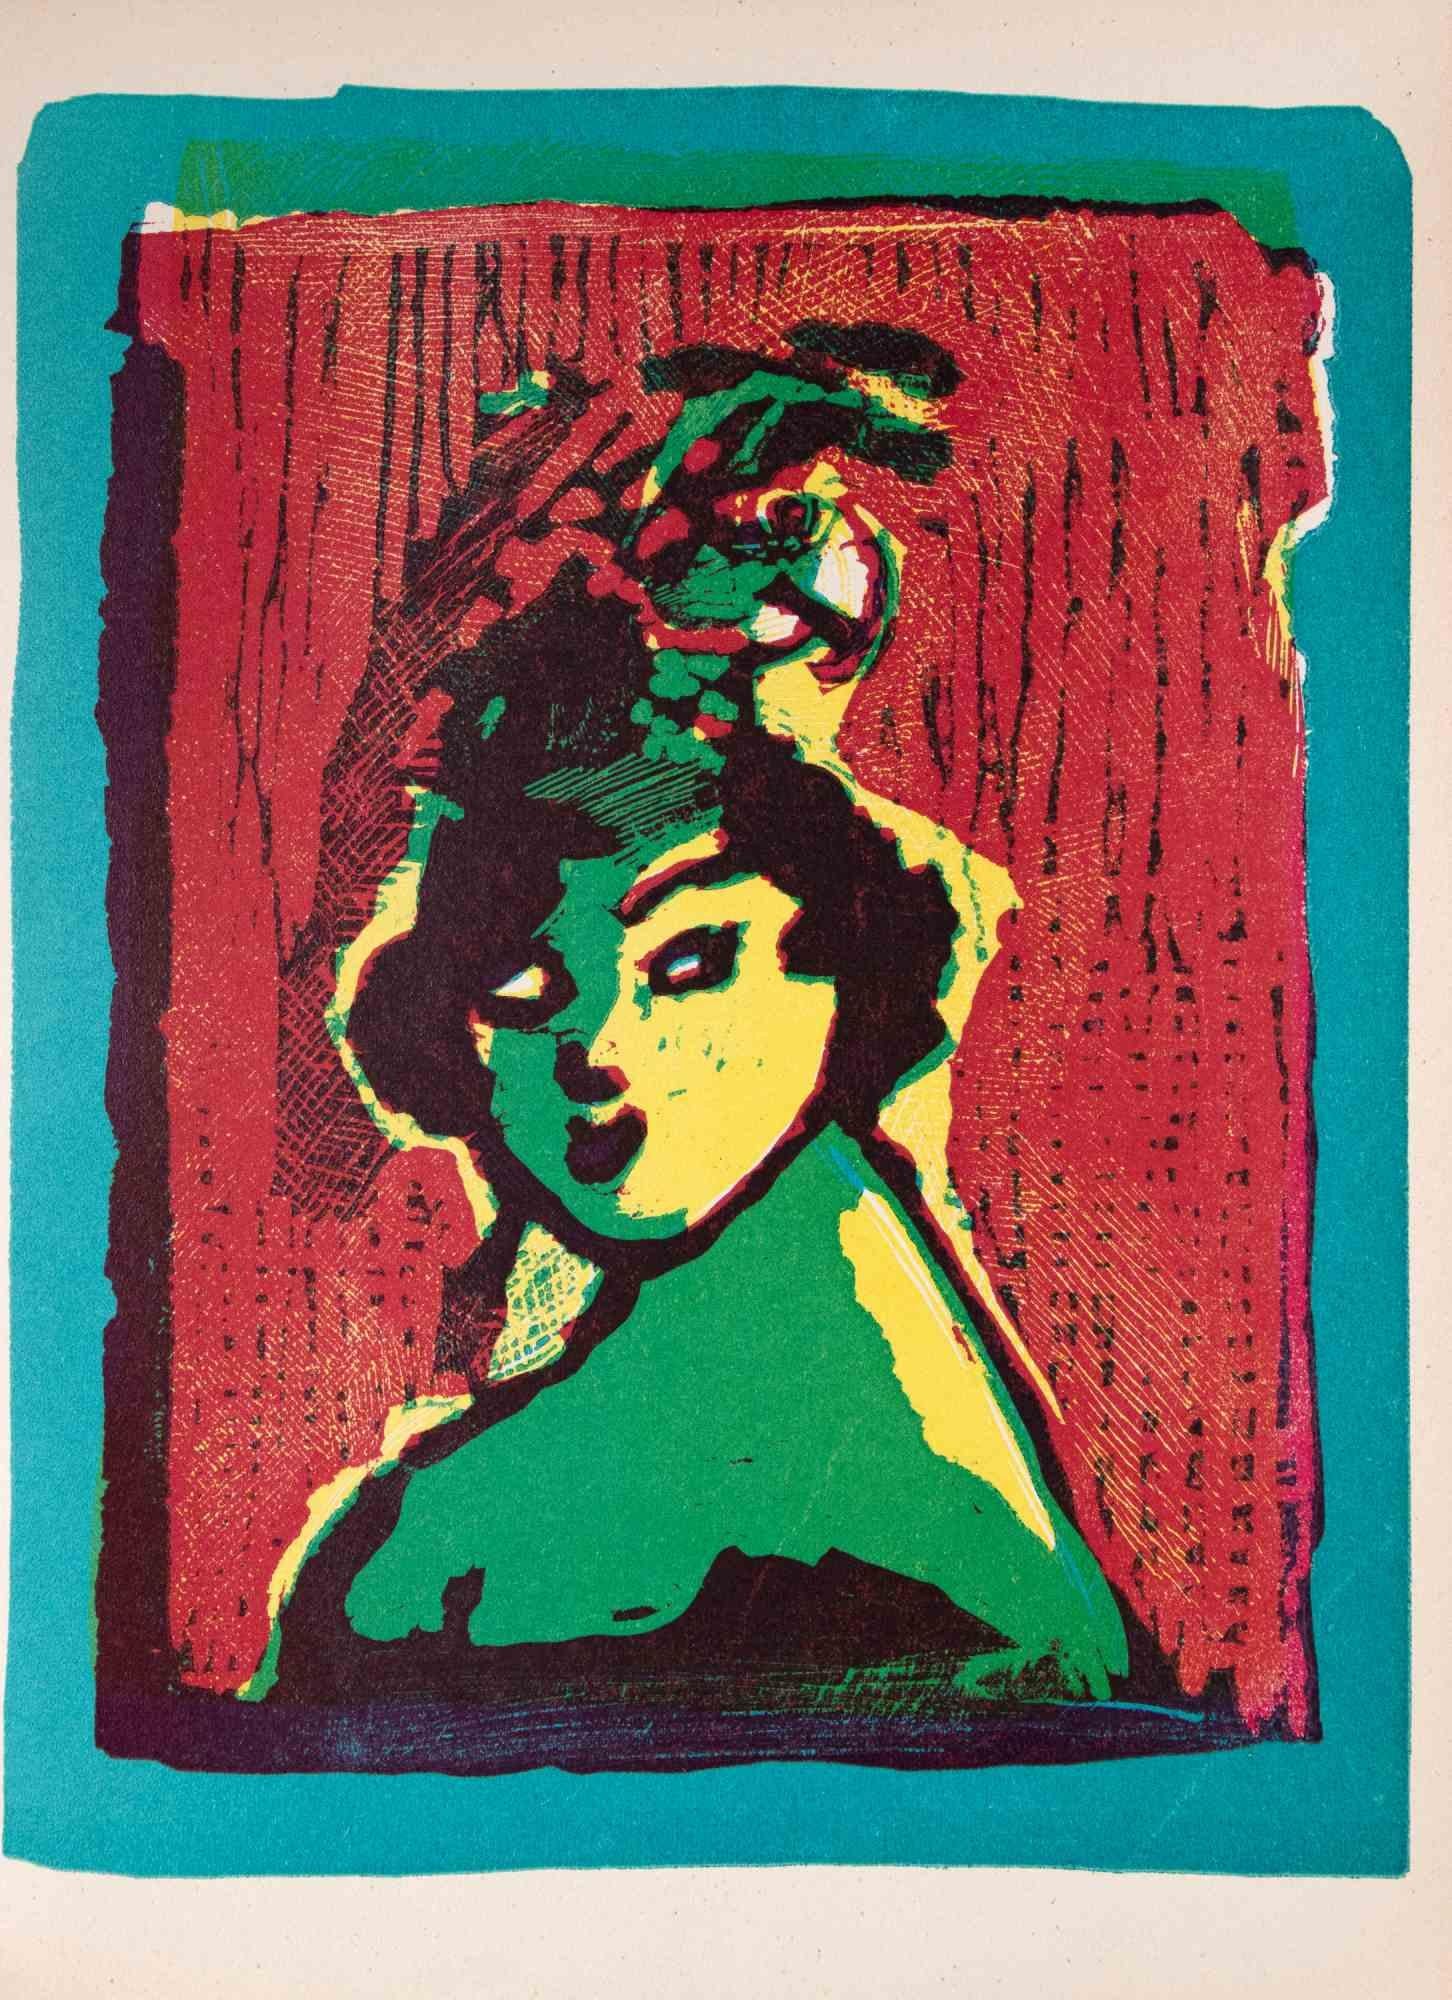 Woman - Original Linocut by Mino Maccari - 1951